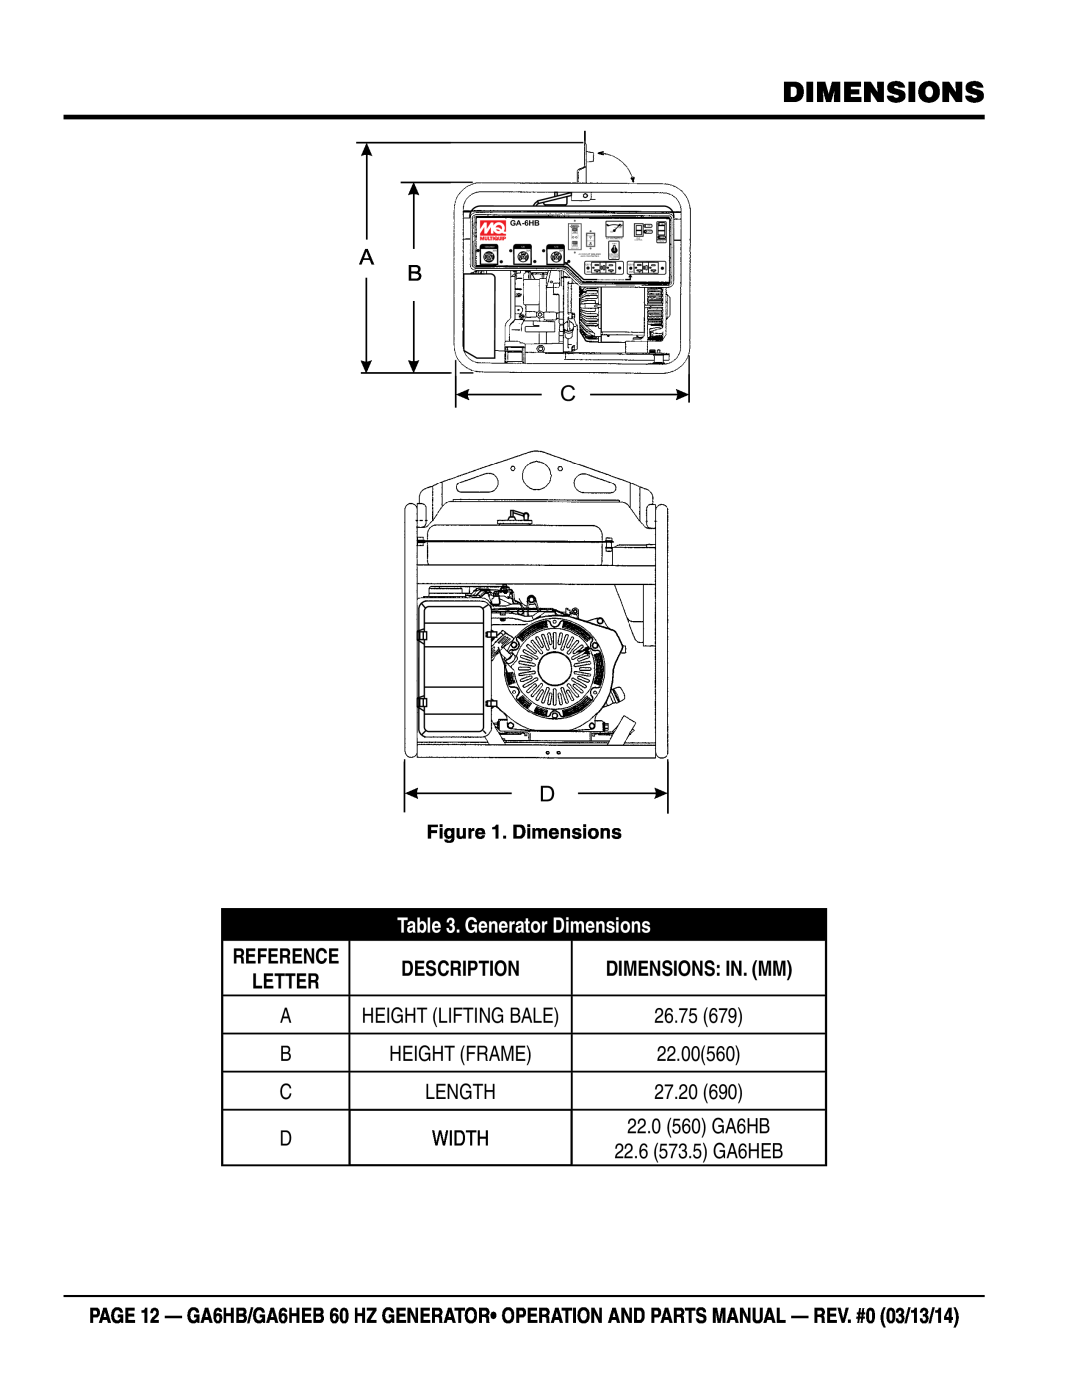 Multiquip ga6HEB dimensions, Generator Dimensions, Description, Dimensions In. Mm, Reference, Letter, GA-6HB, 120/240V 